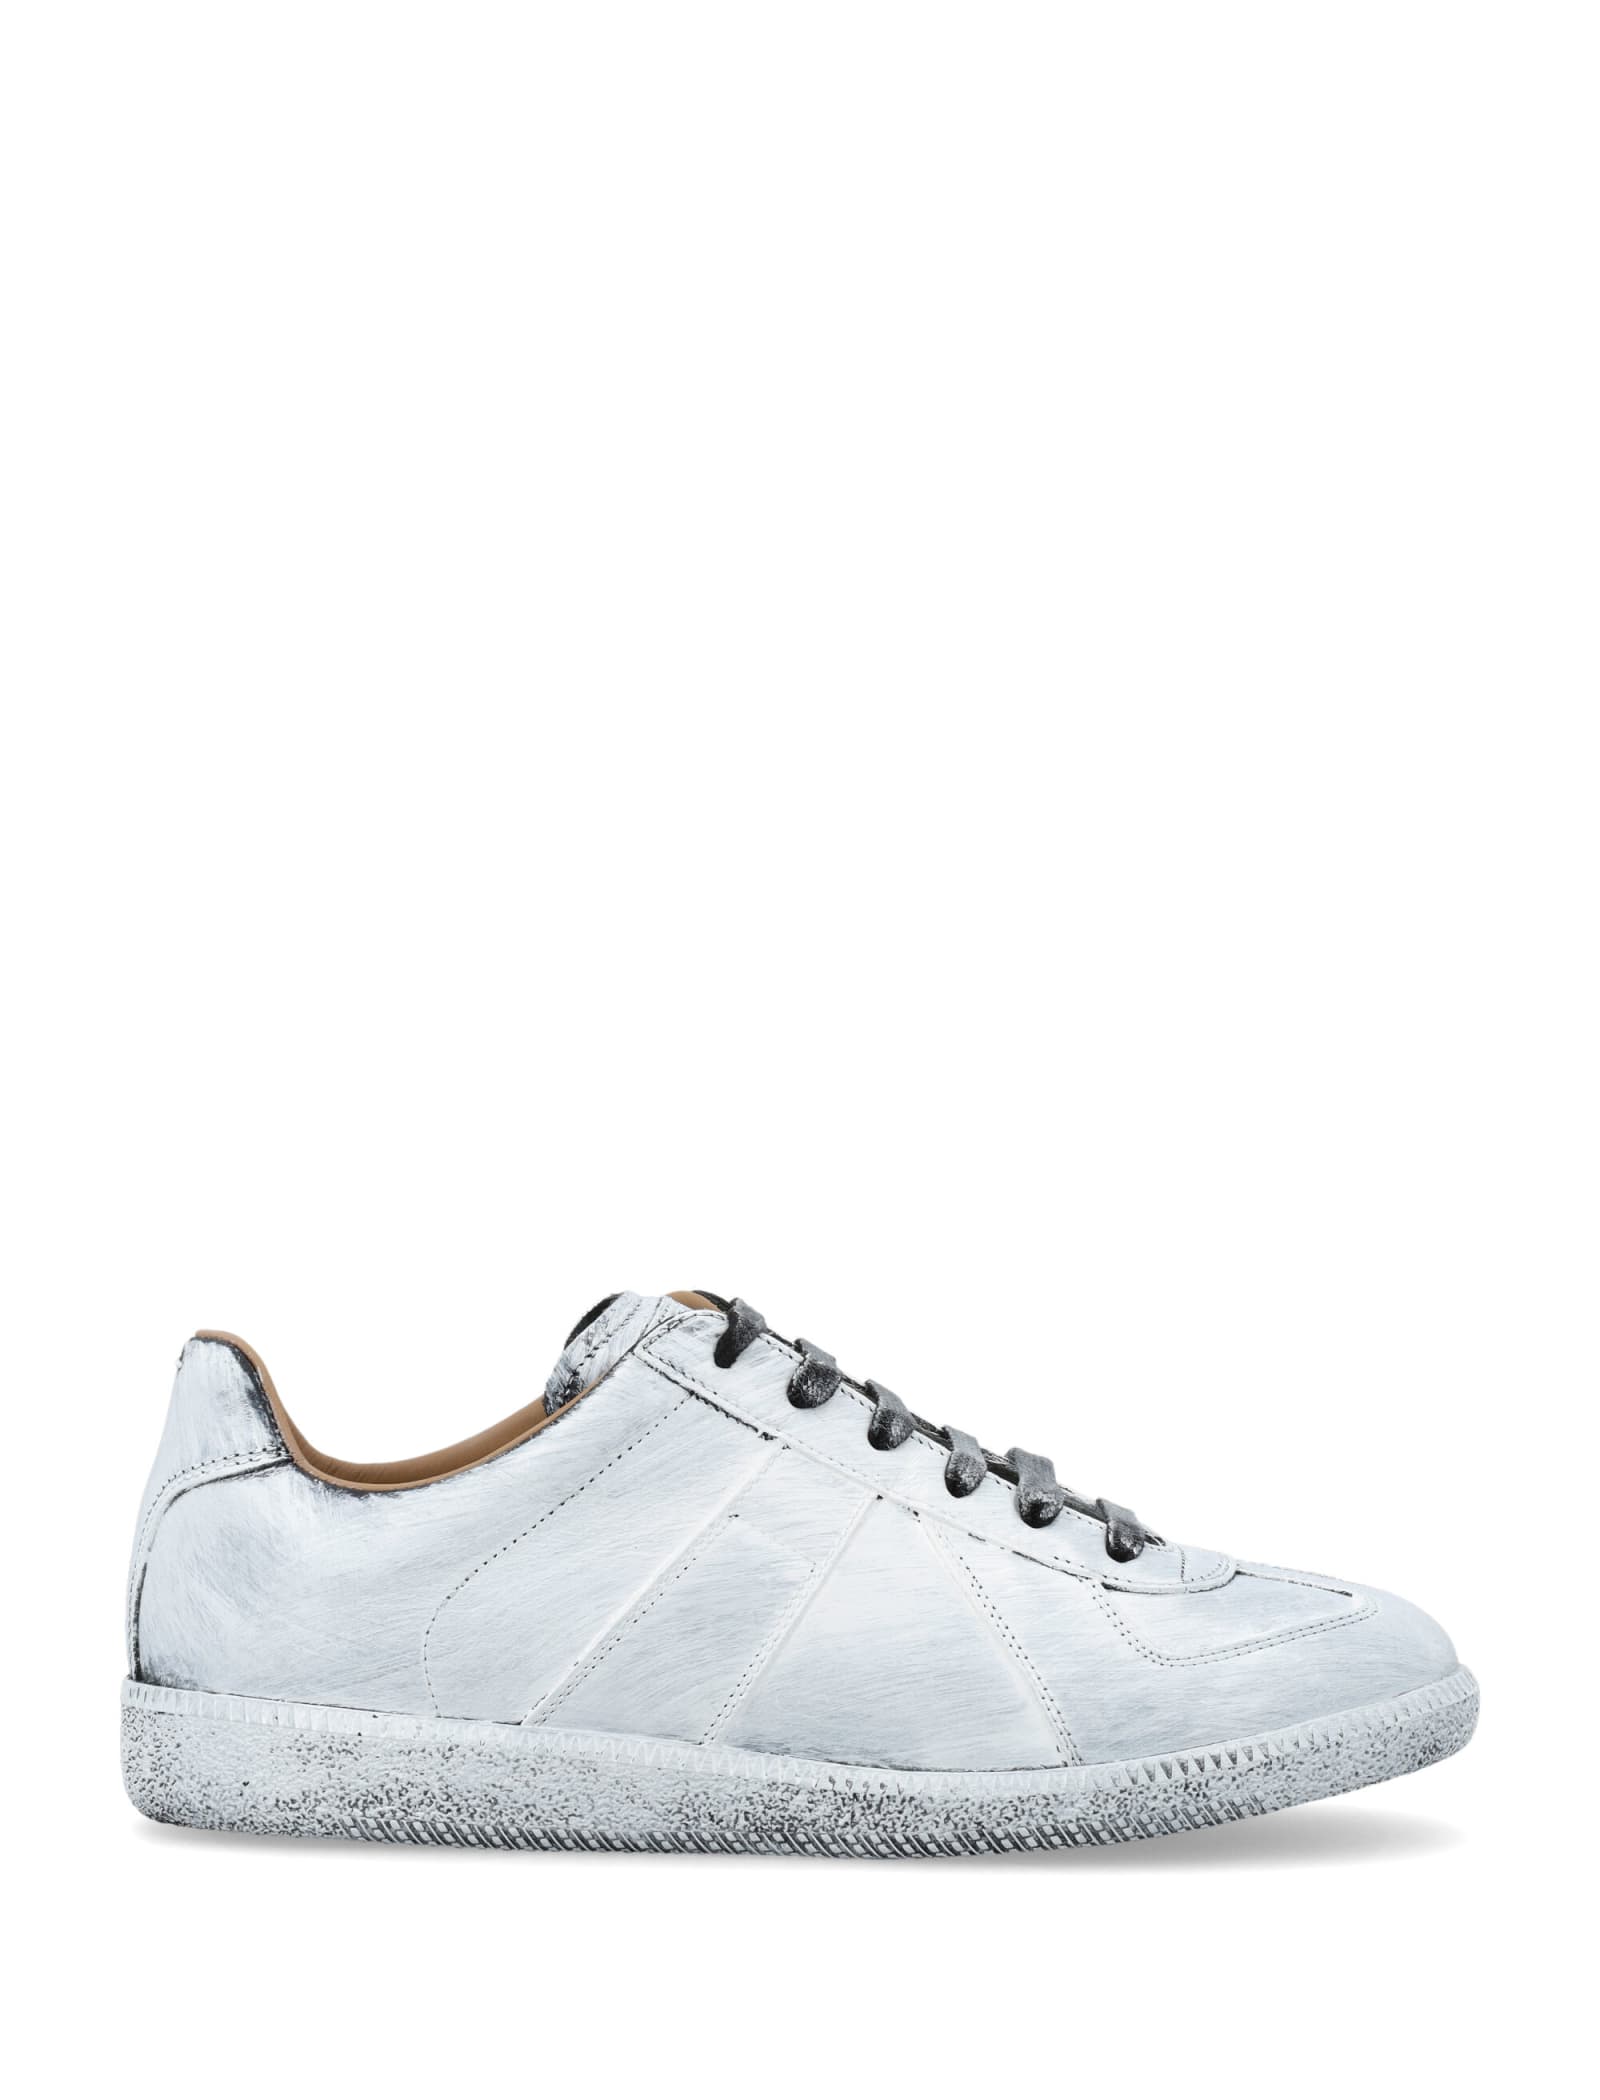 Maison Margiela Replica White Paint Sneakers | ModeSens